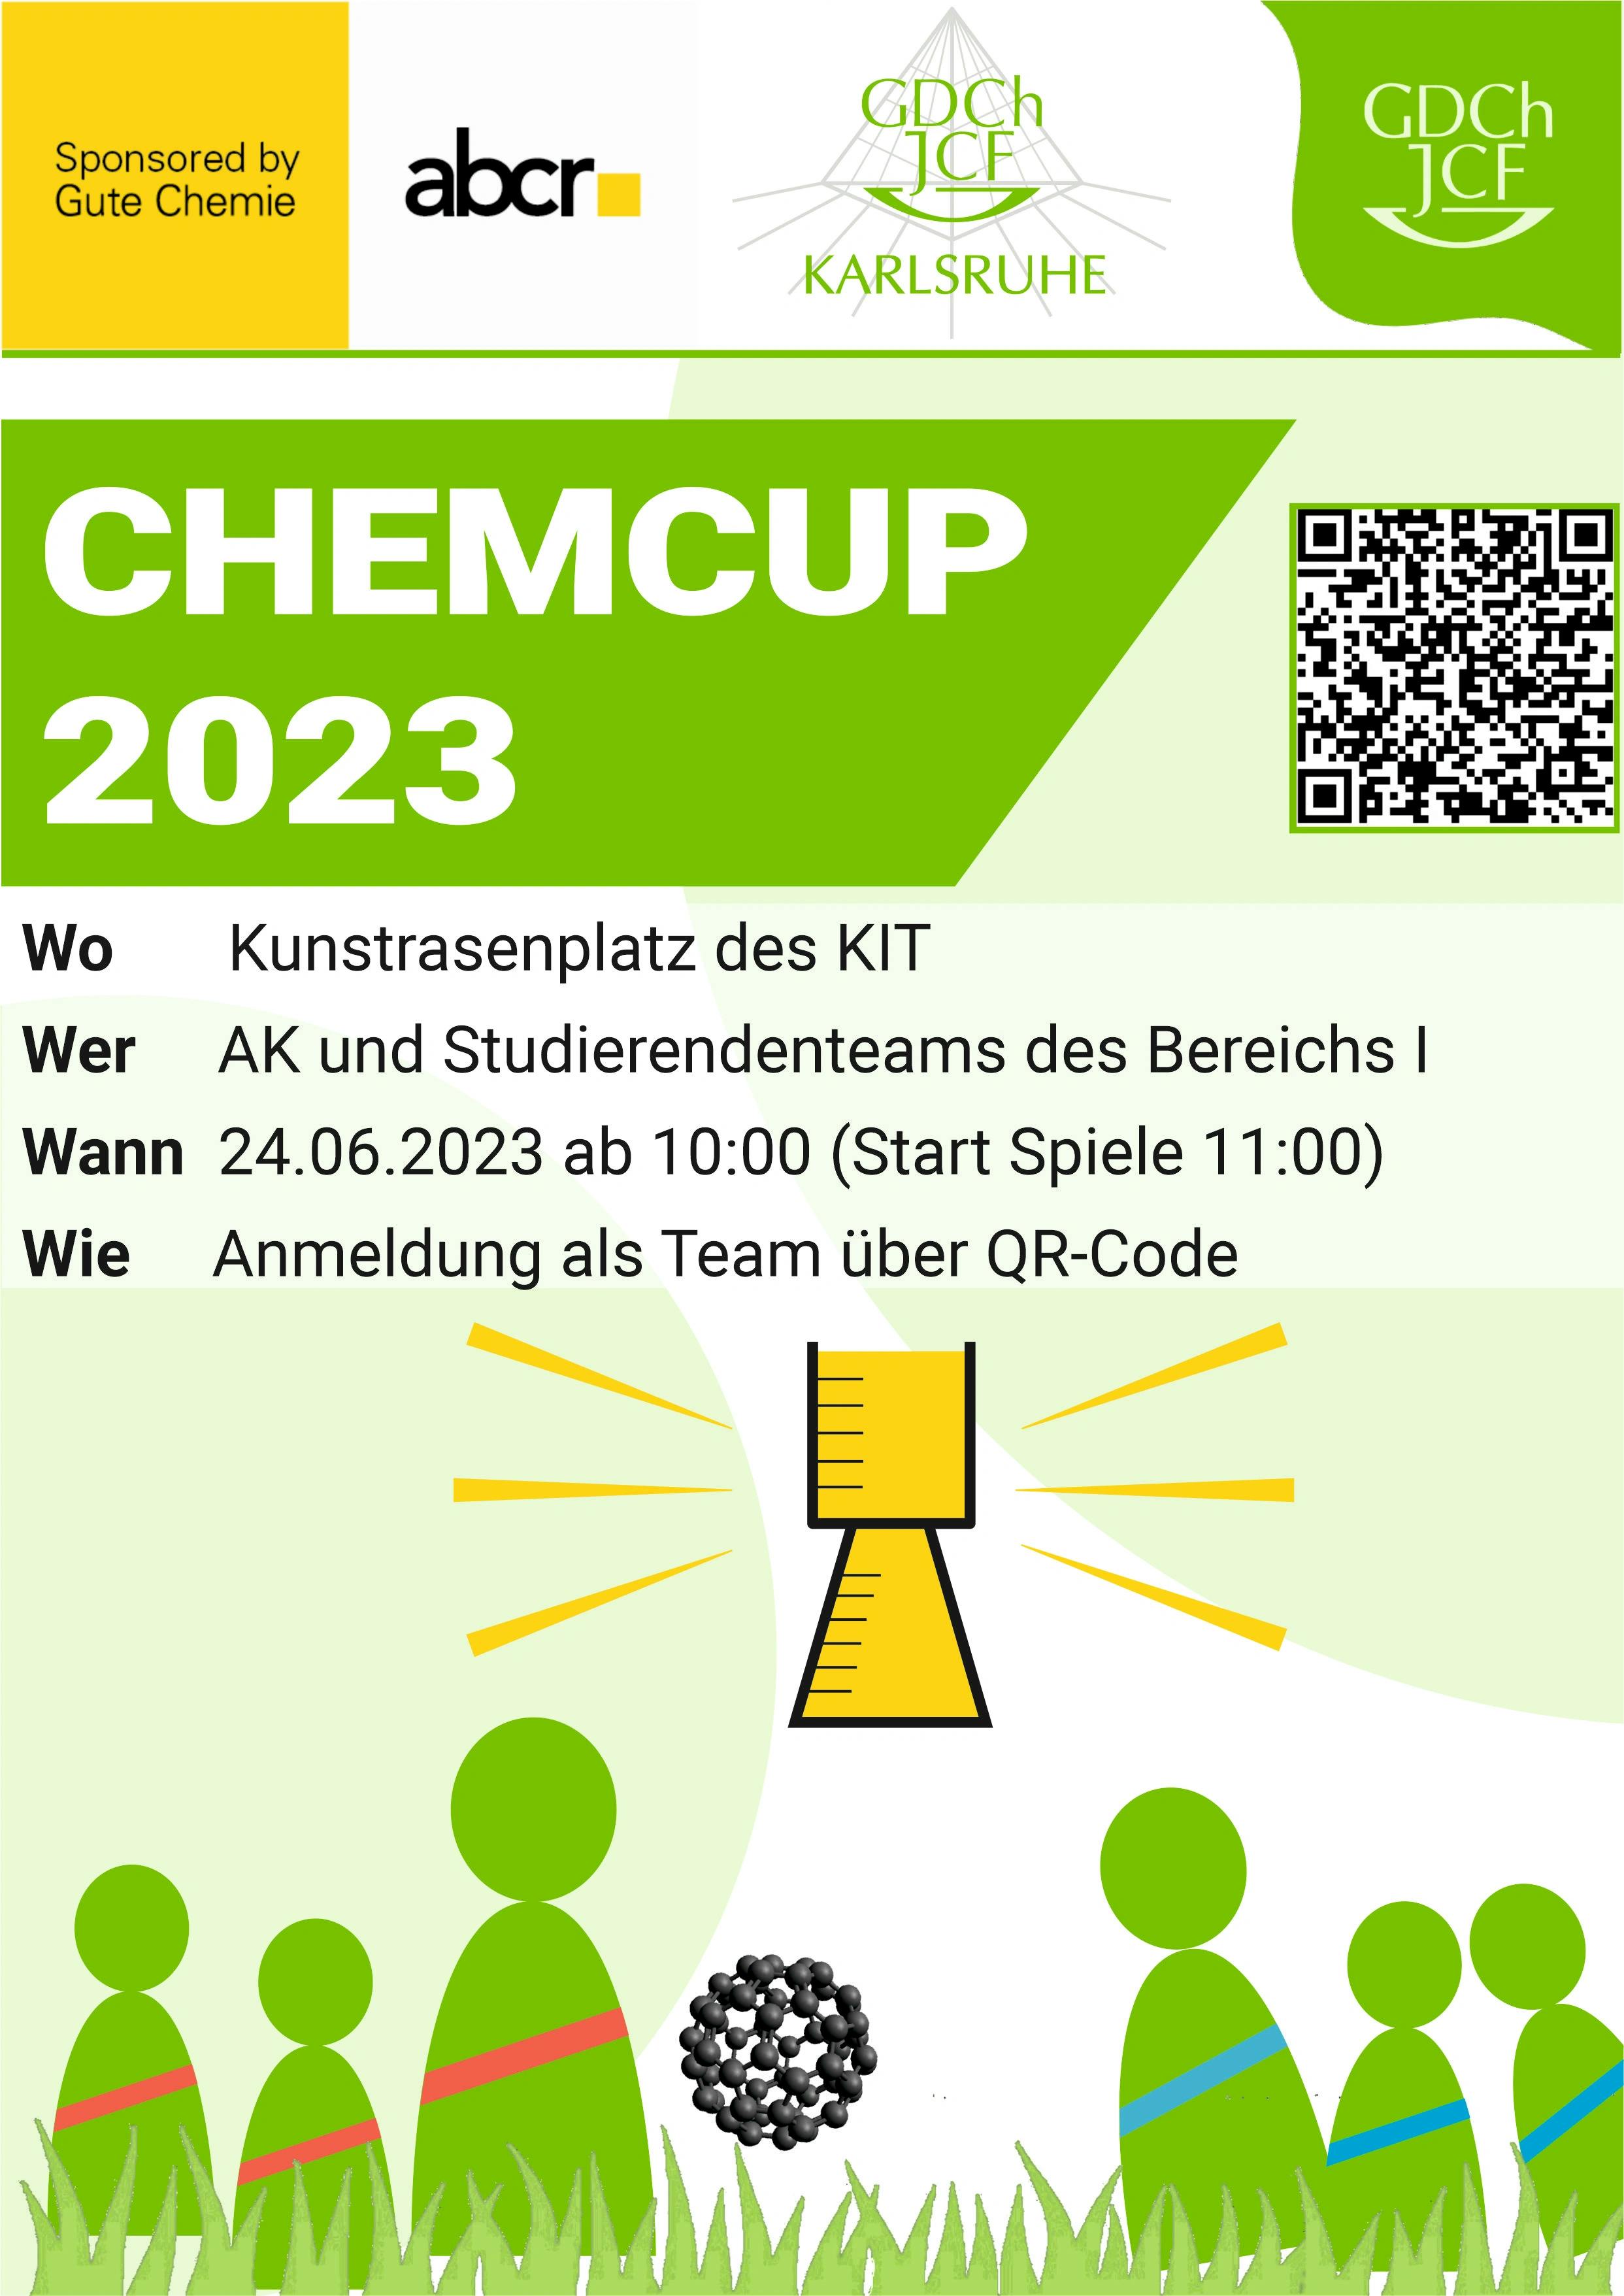 Chem Cup 2023